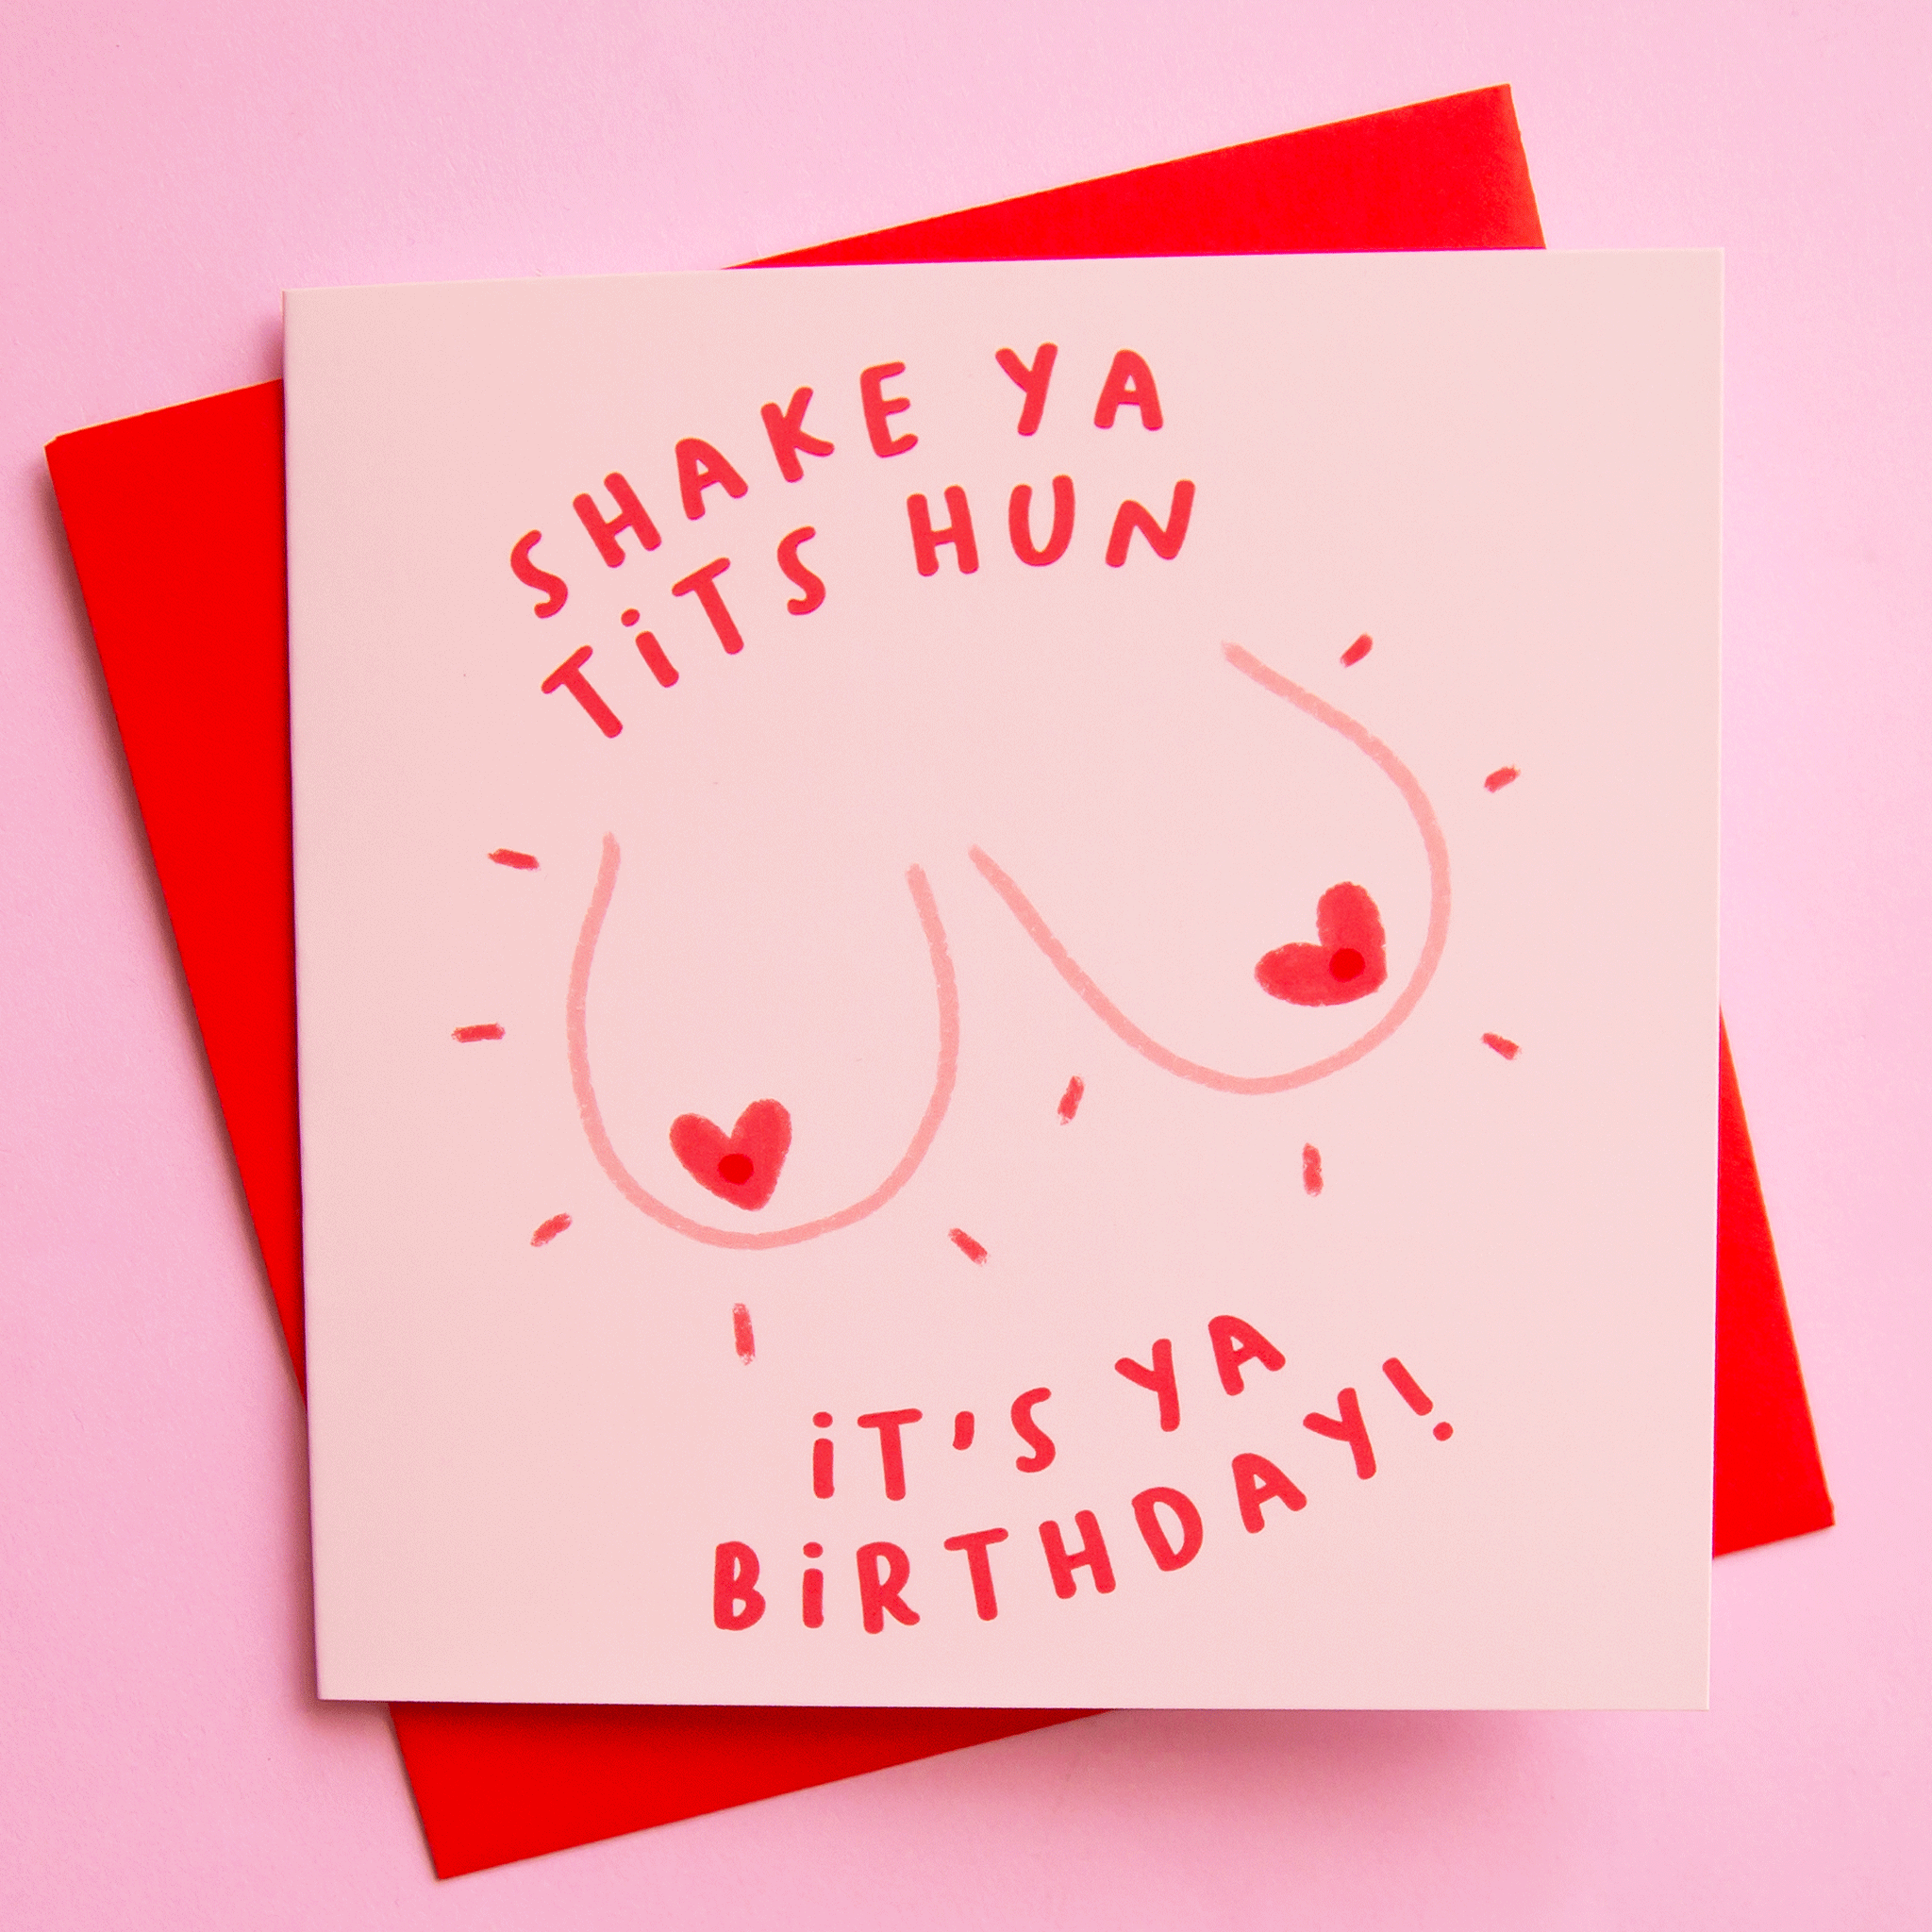 A pink birthday card that reads, "Shake Ya Tits Hun It's Ya Birthday!".